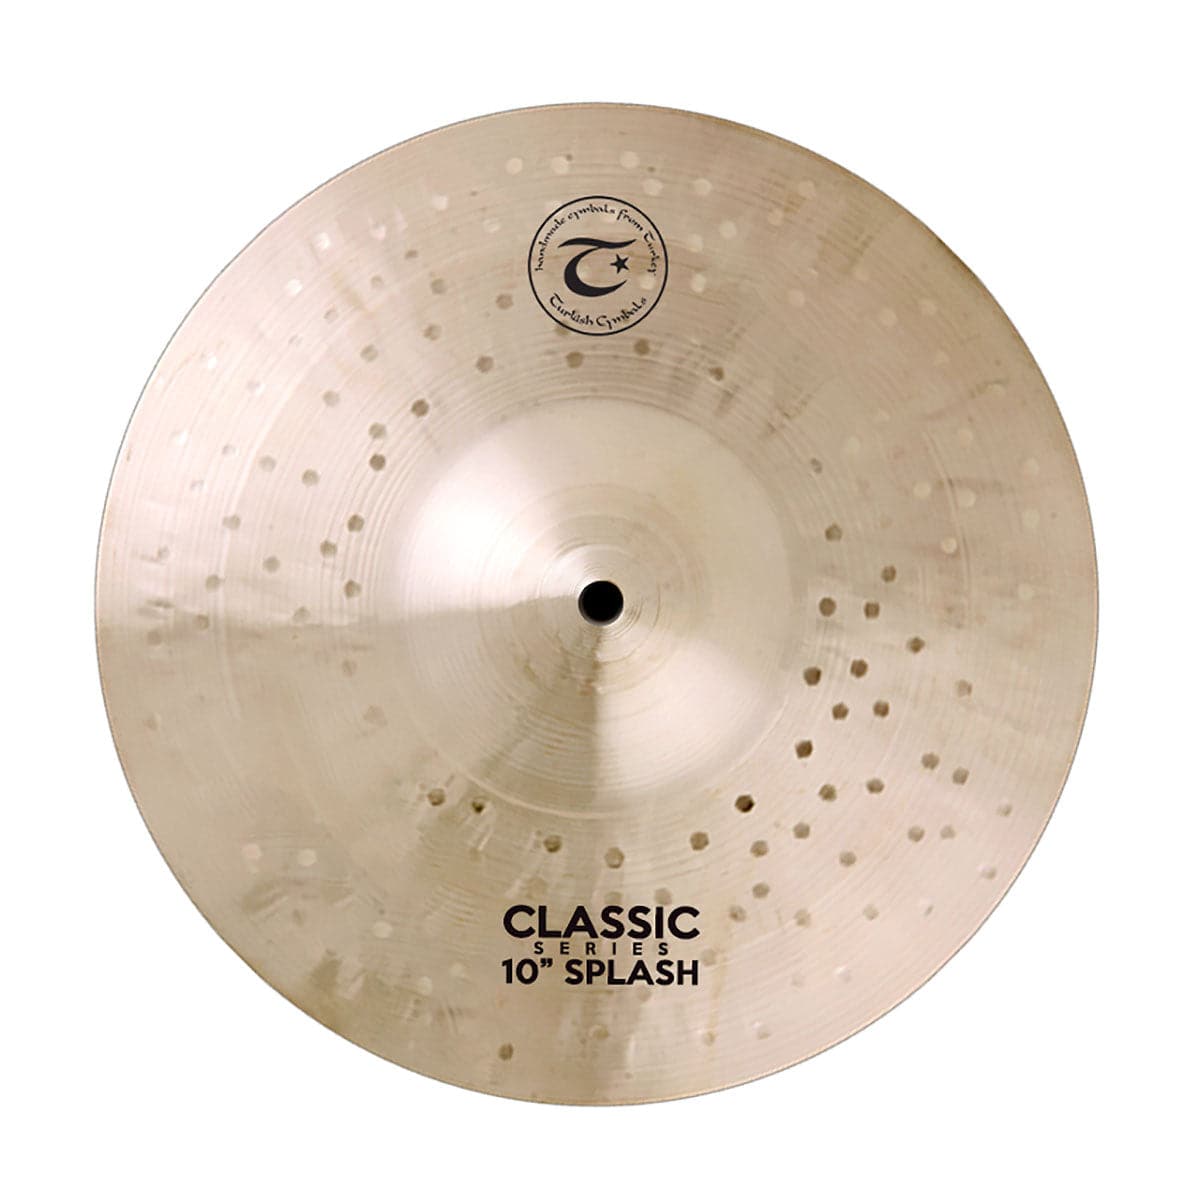 Turkish Classic Splash Cymbal 10"